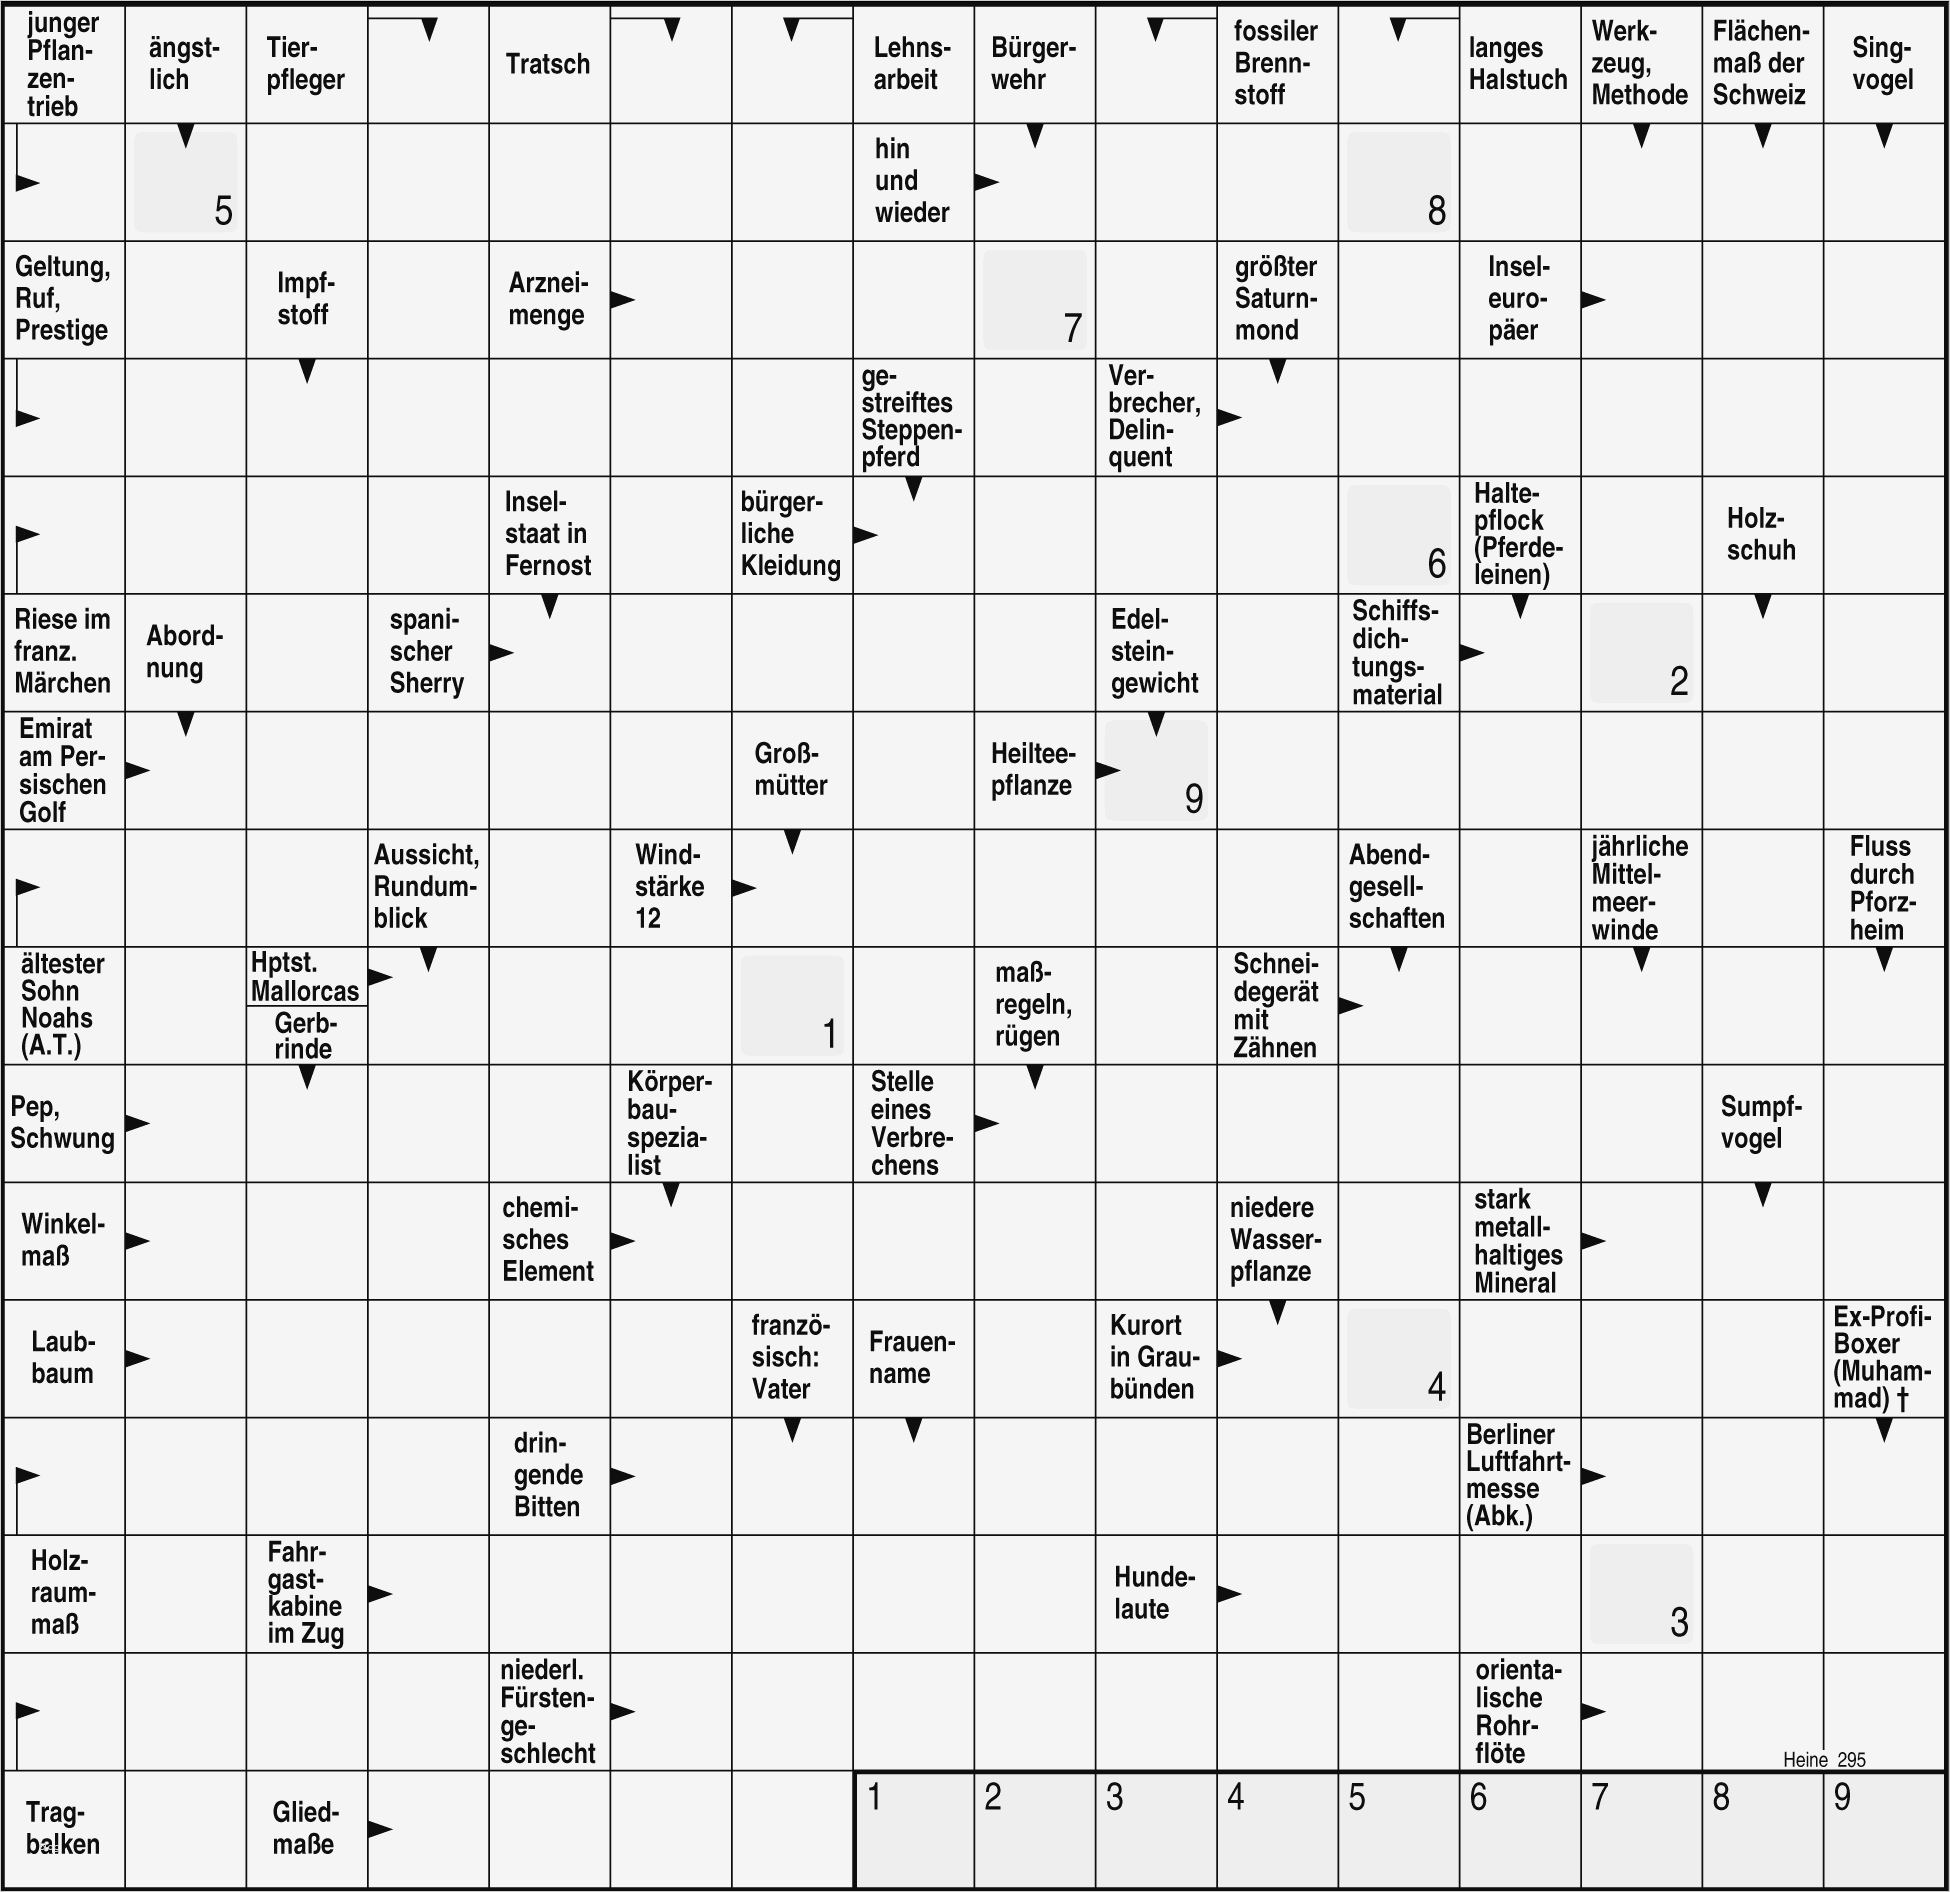 Berühmt Sudoku Vorlagenwort Bilder Entry Level Resume